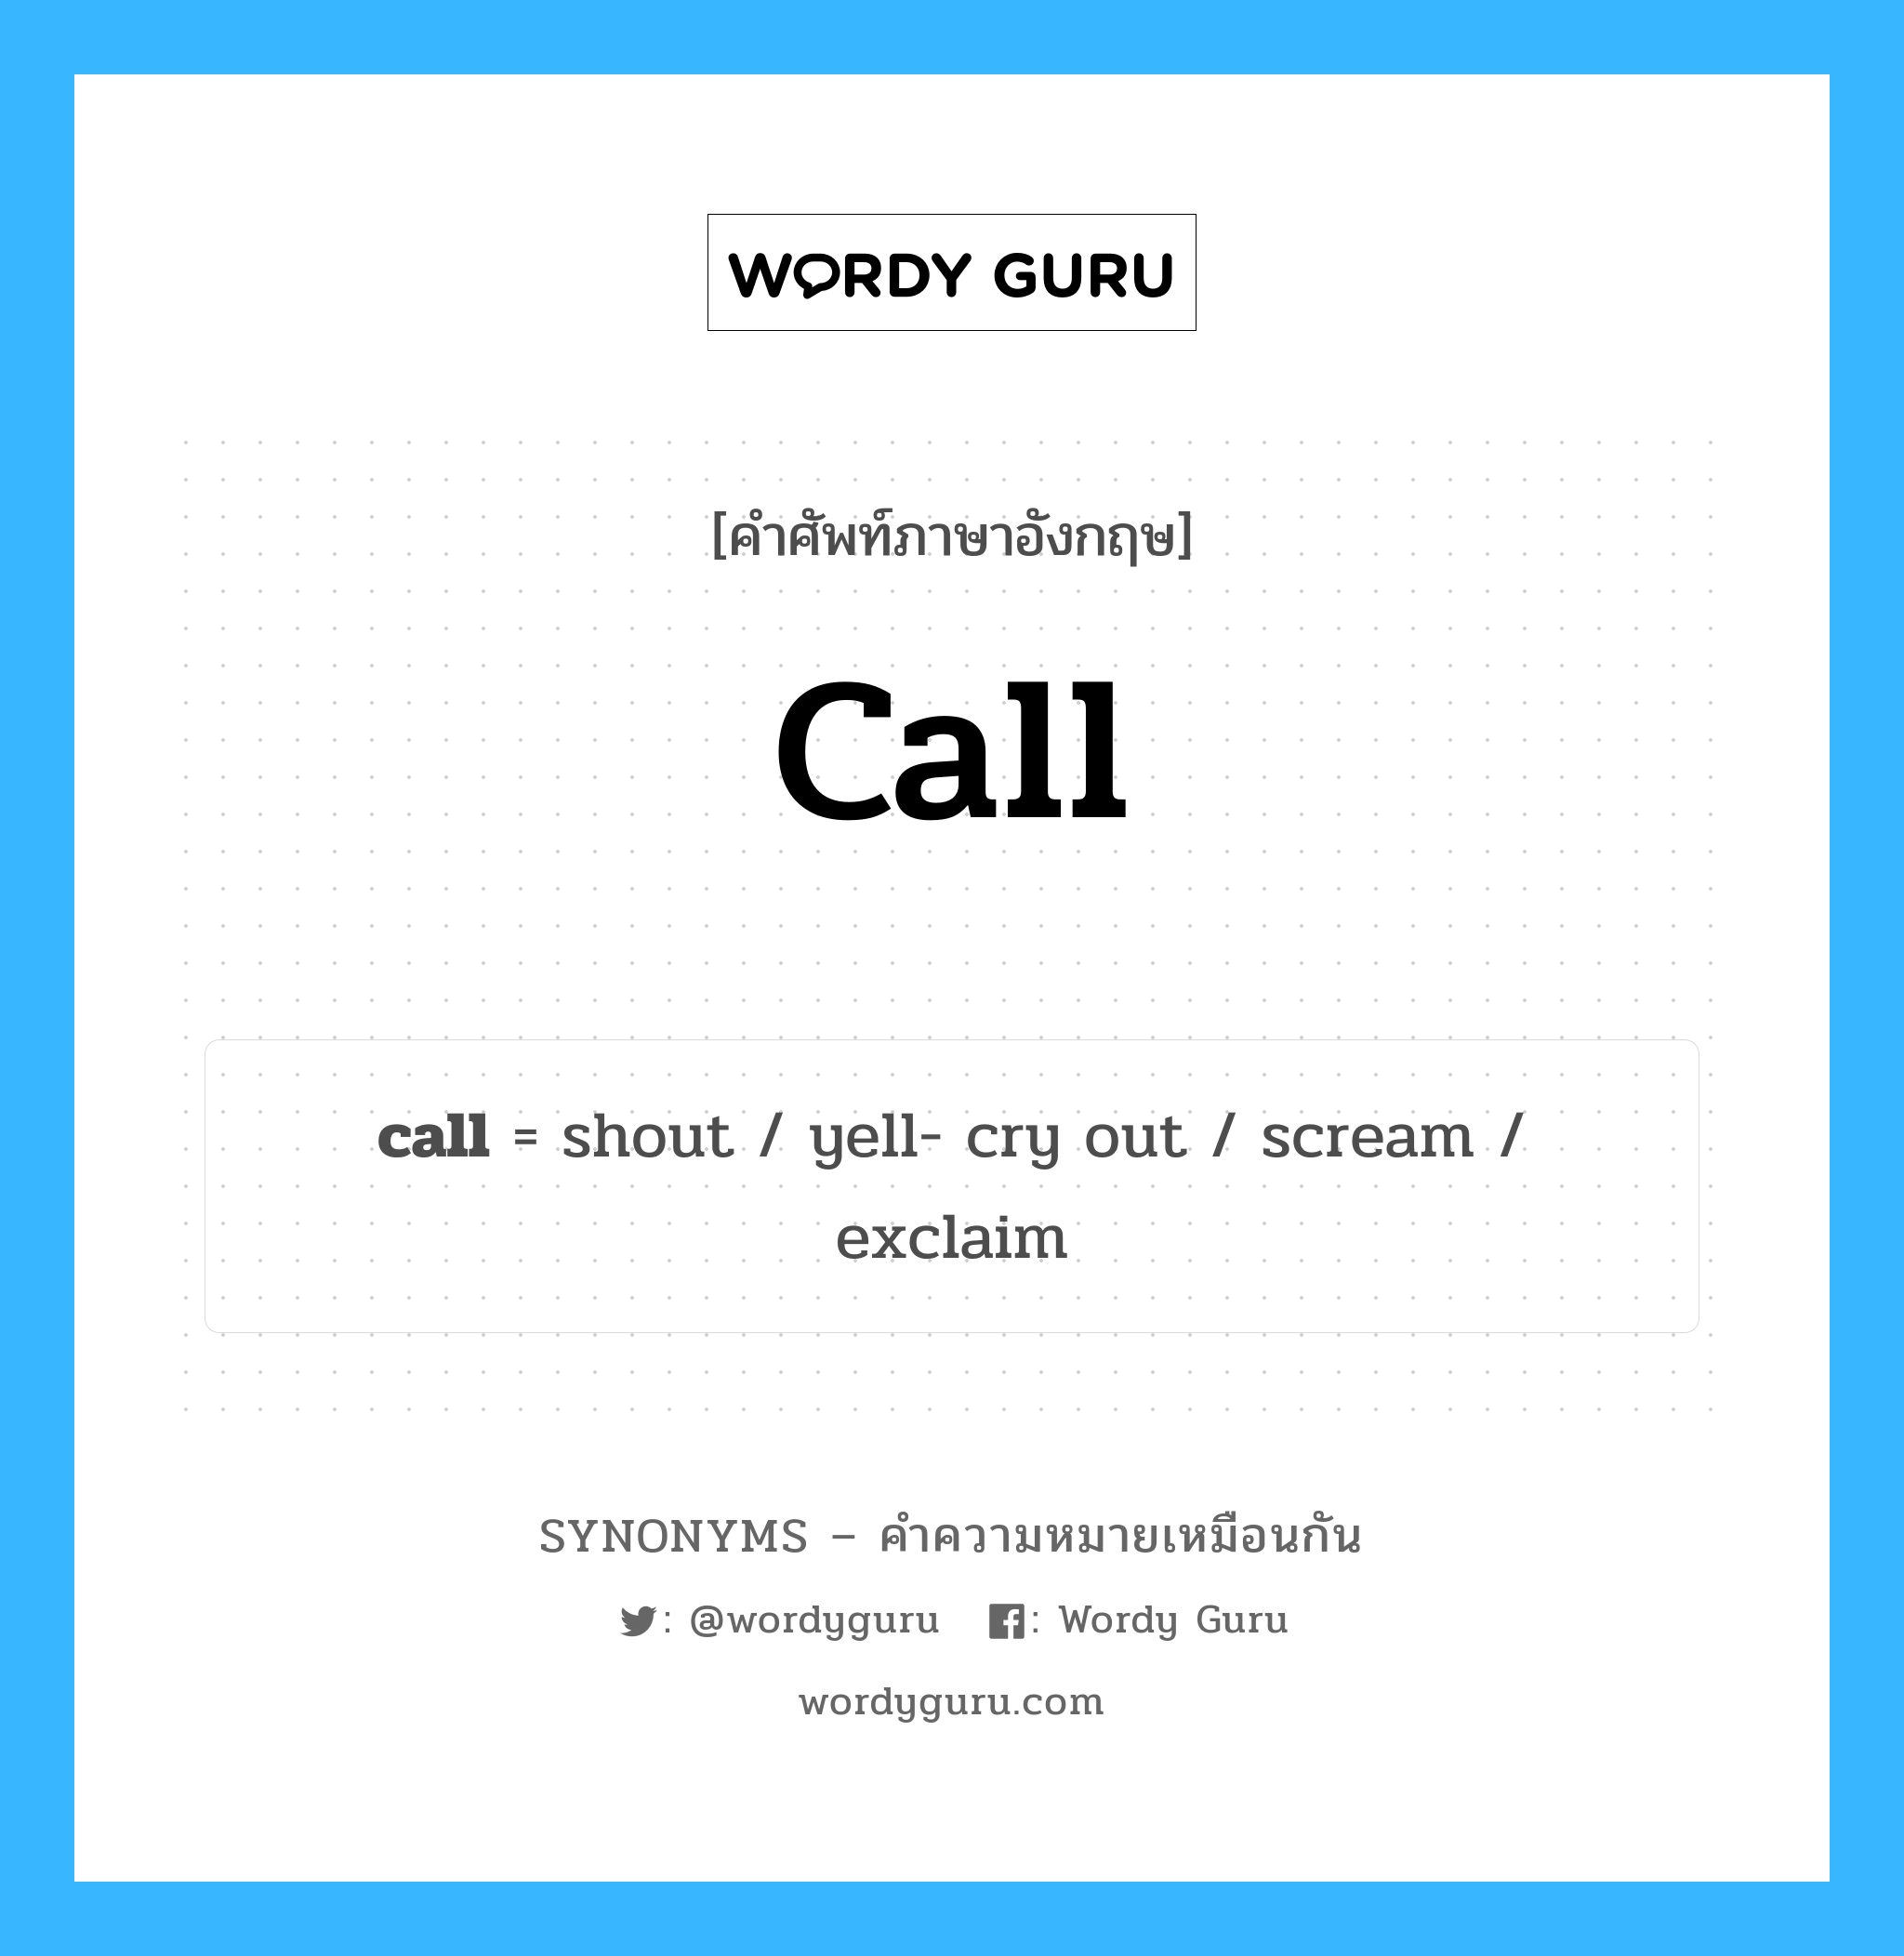 yell- cry out เป็นหนึ่งใน call และมีคำอื่น ๆ อีกดังนี้, คำศัพท์ภาษาอังกฤษ yell- cry out ความหมายคล้ายกันกับ call แปลว่า เยลล์ร้องไห้ออกมา หมวด call